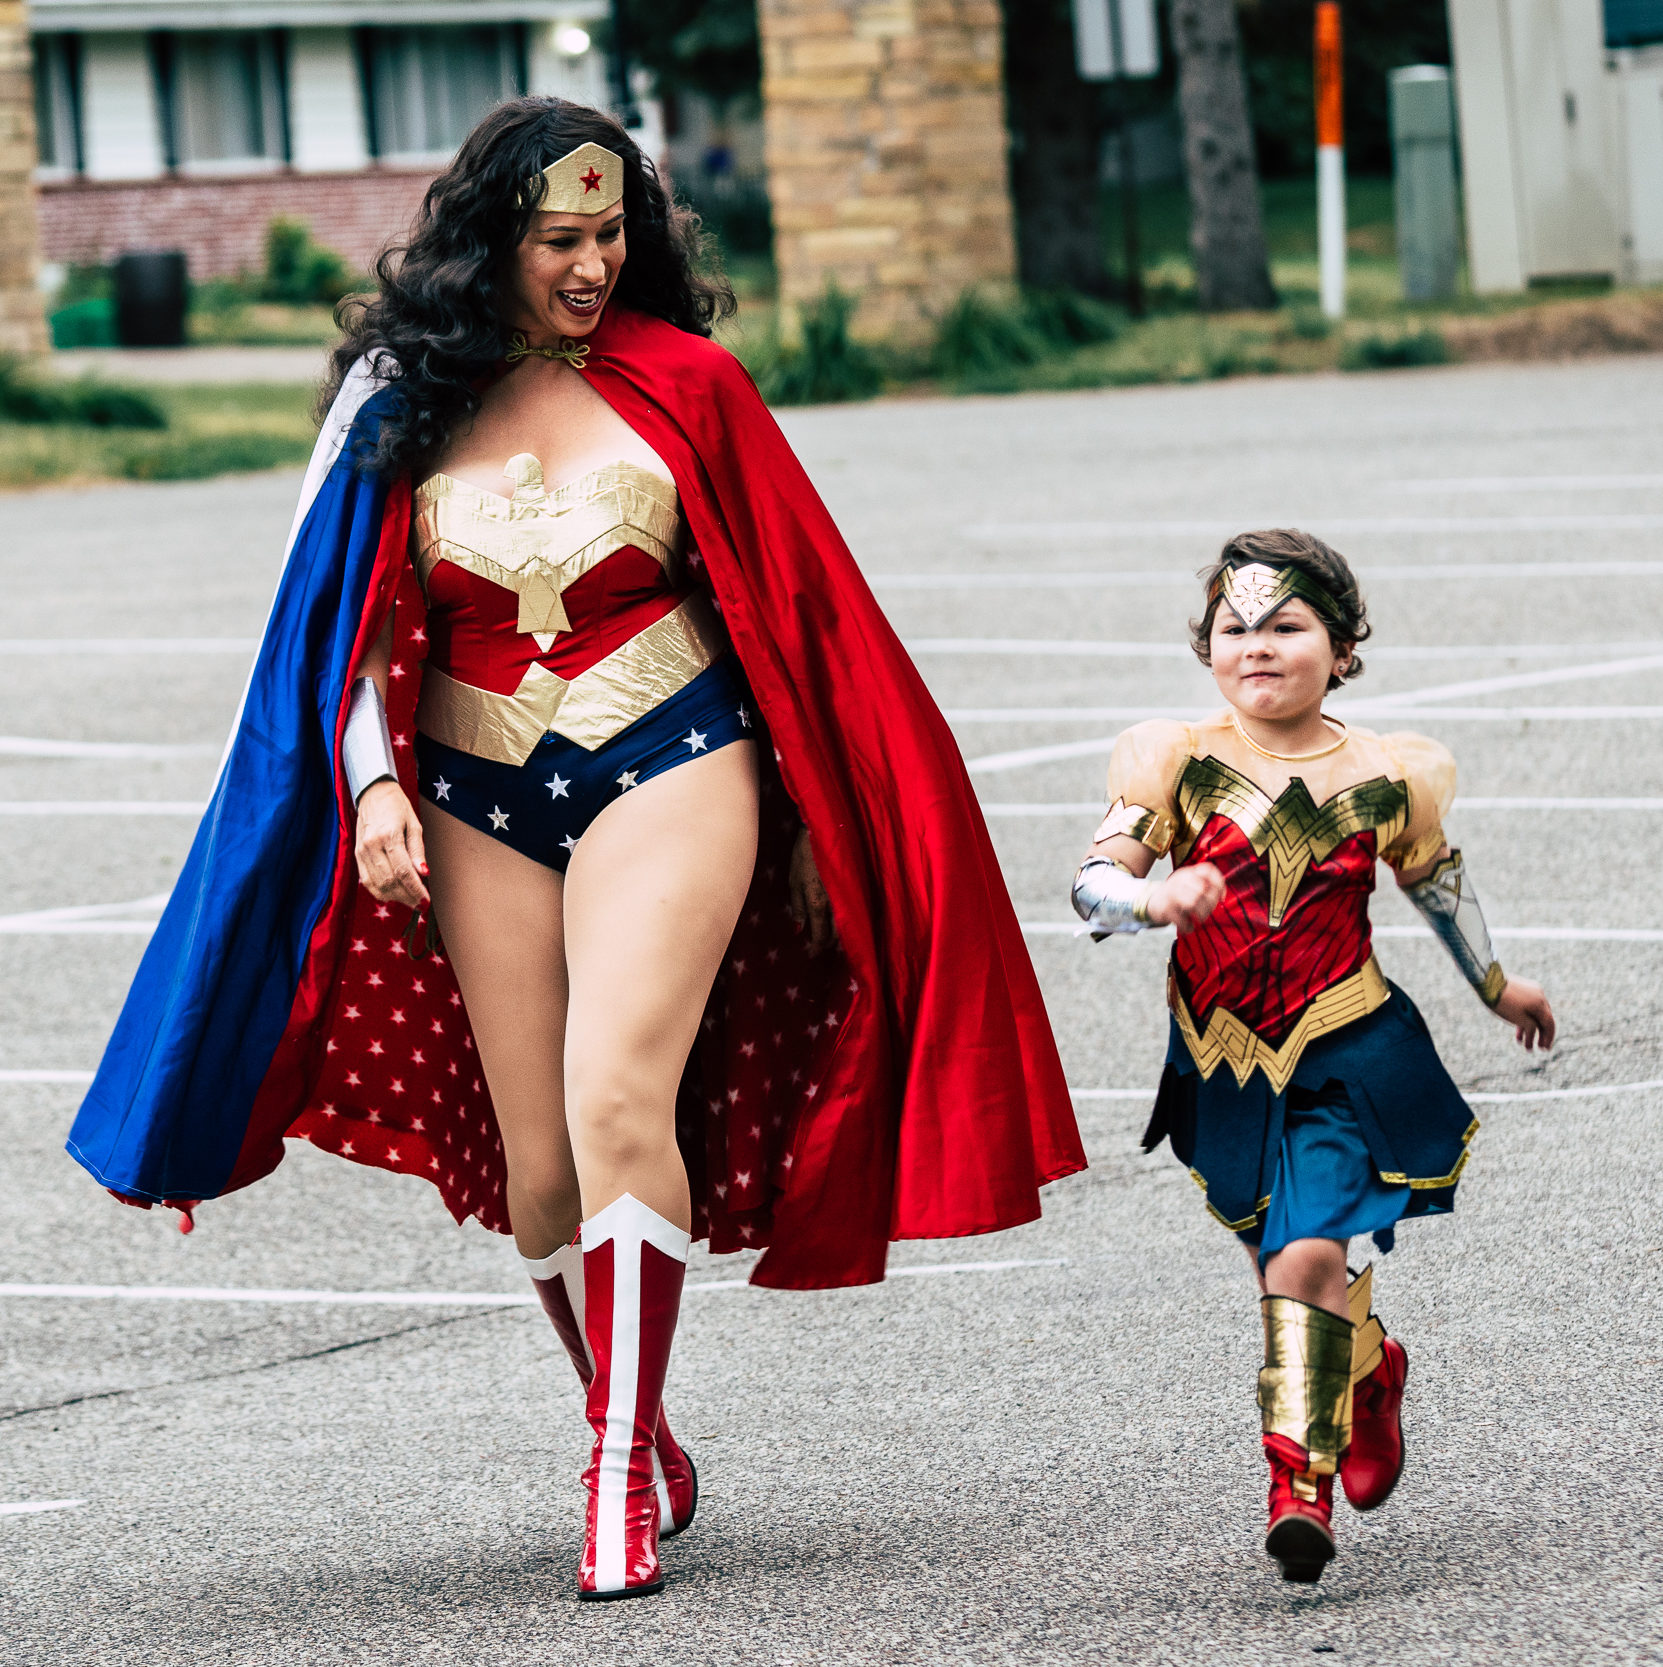 Mayor Amáda Márquez Simula encourages a young cancer survivor, both dressed as Wonder Woman.